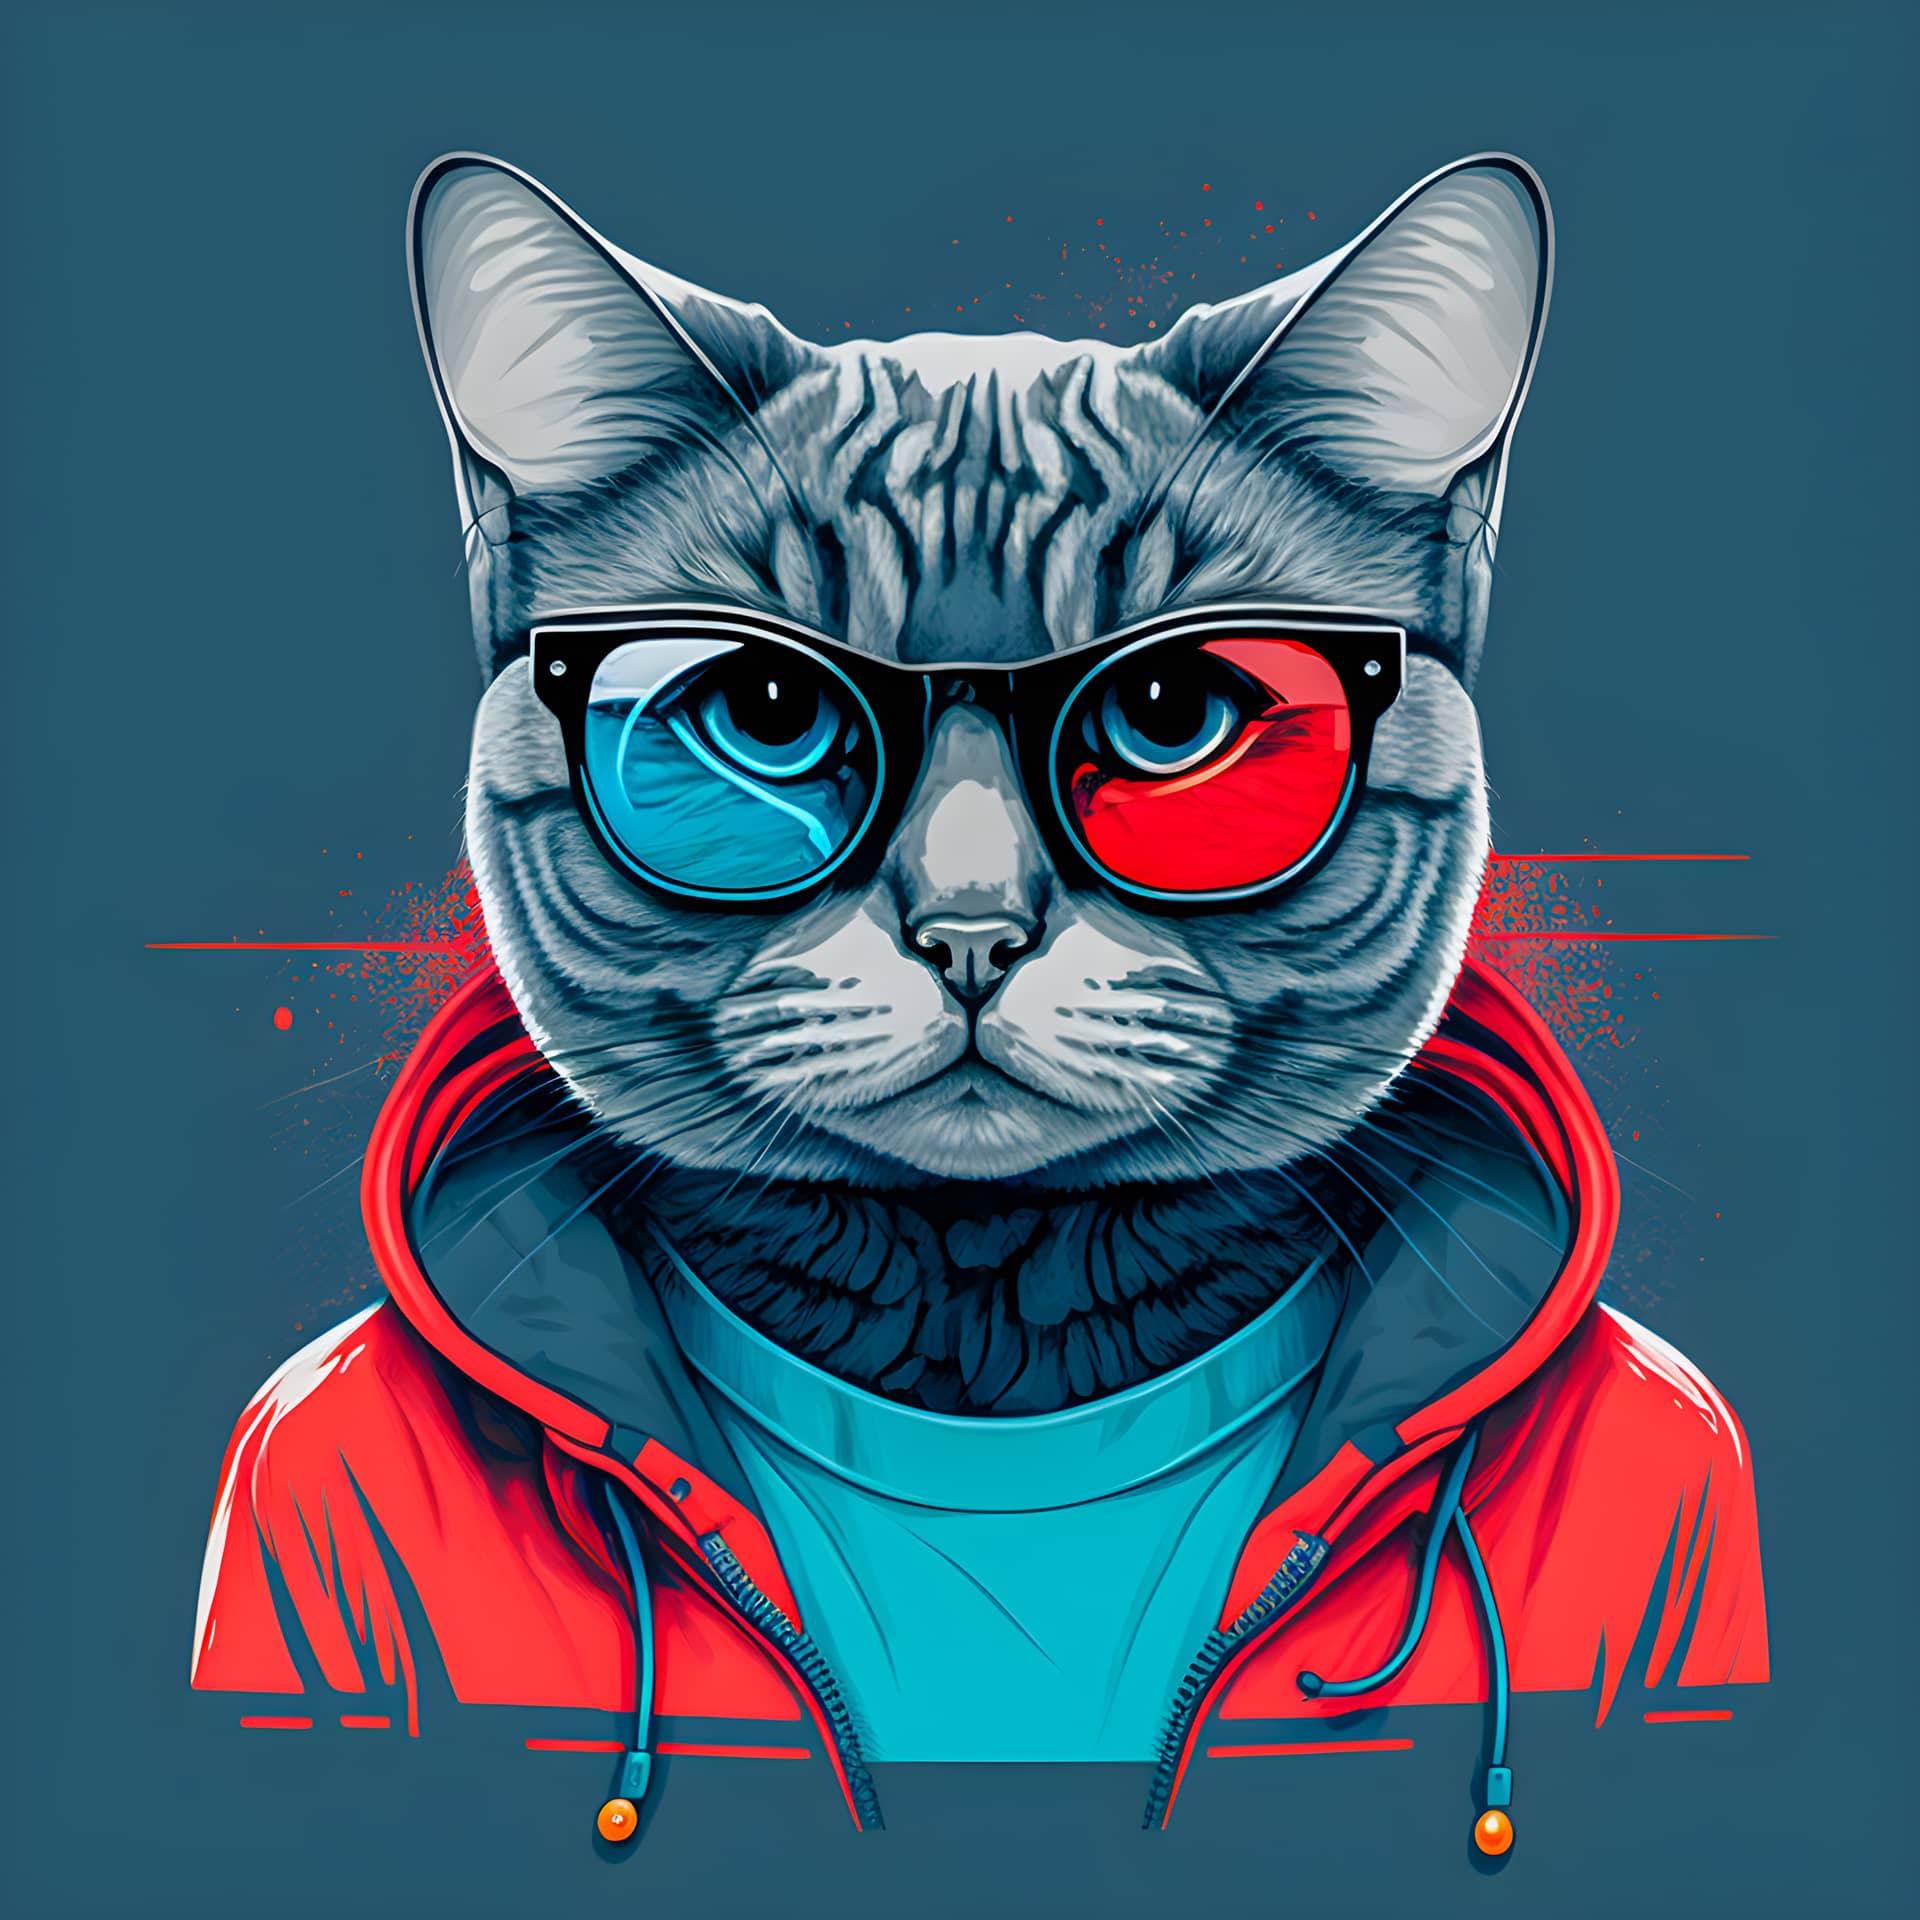 Portrait cat cute pop art illustration hand drawn realistic image